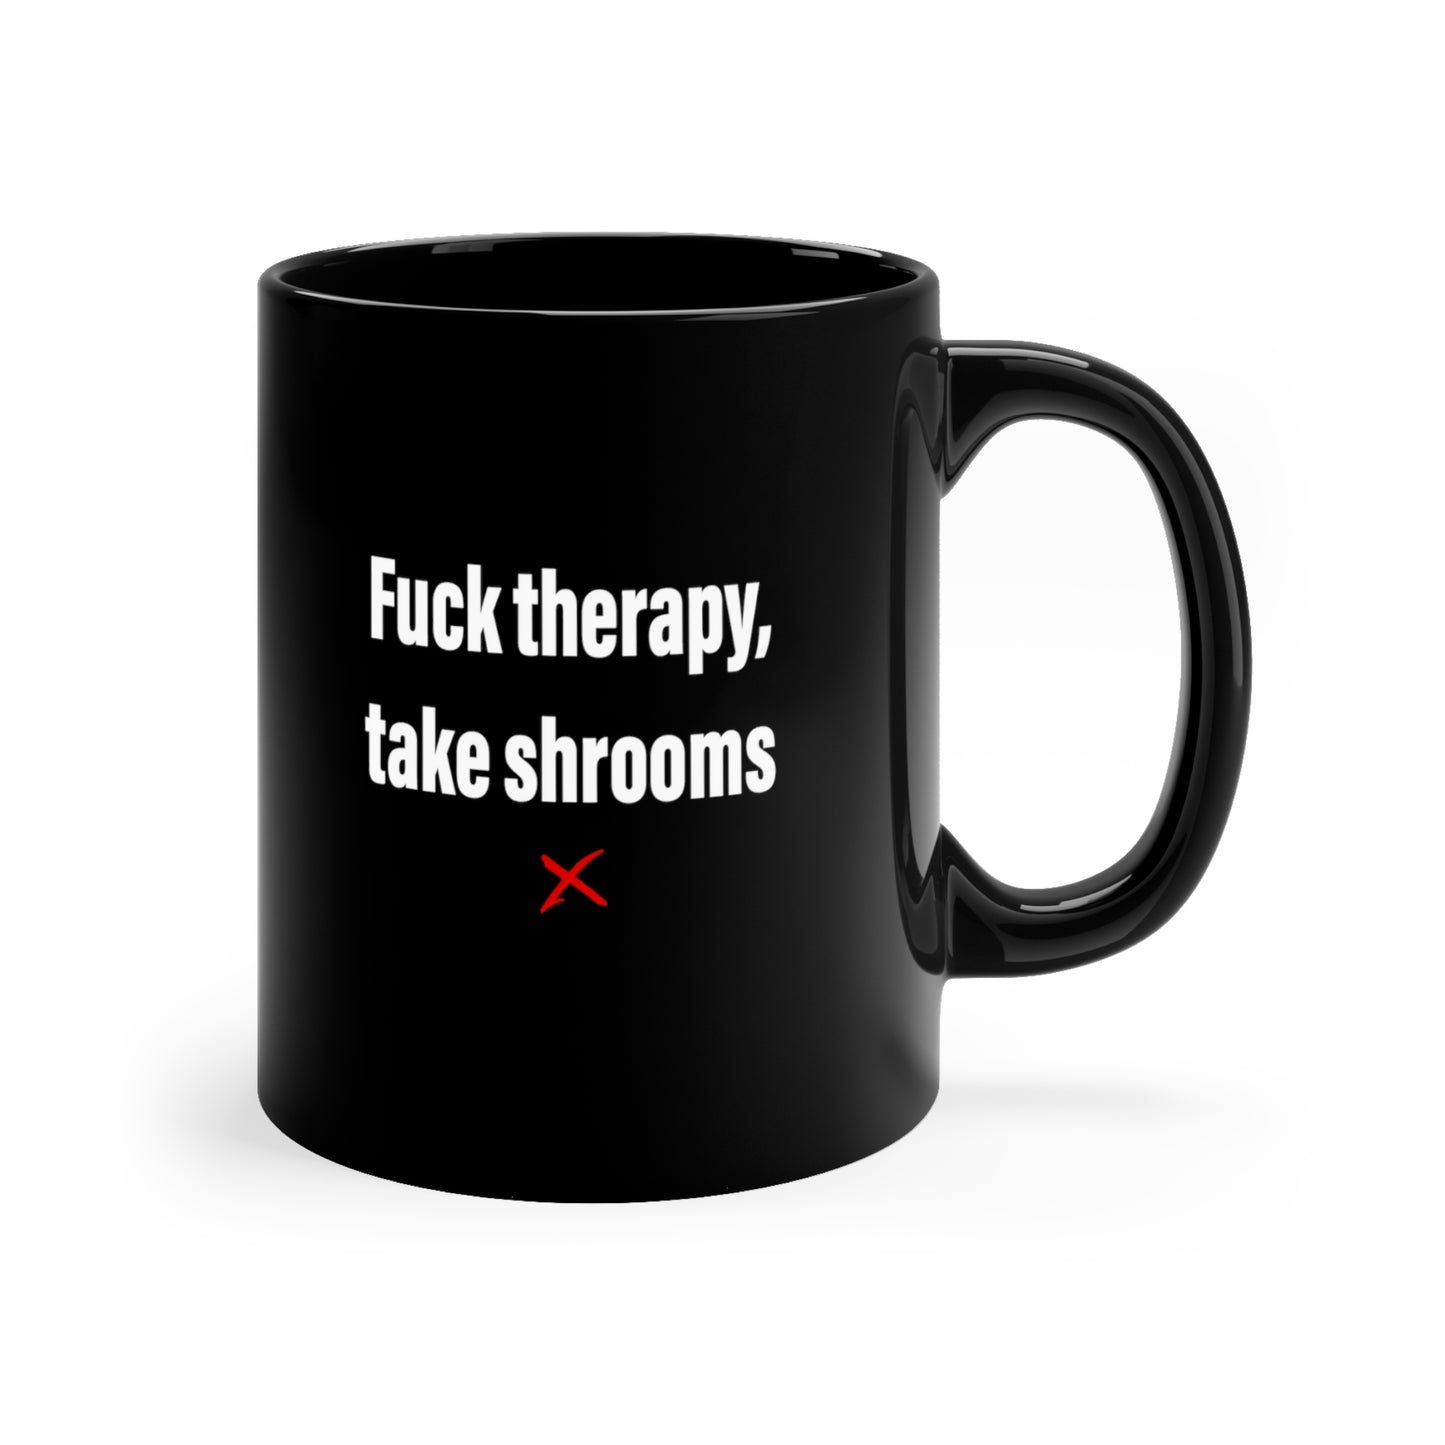 Fuck therapy, take shrooms - Mug